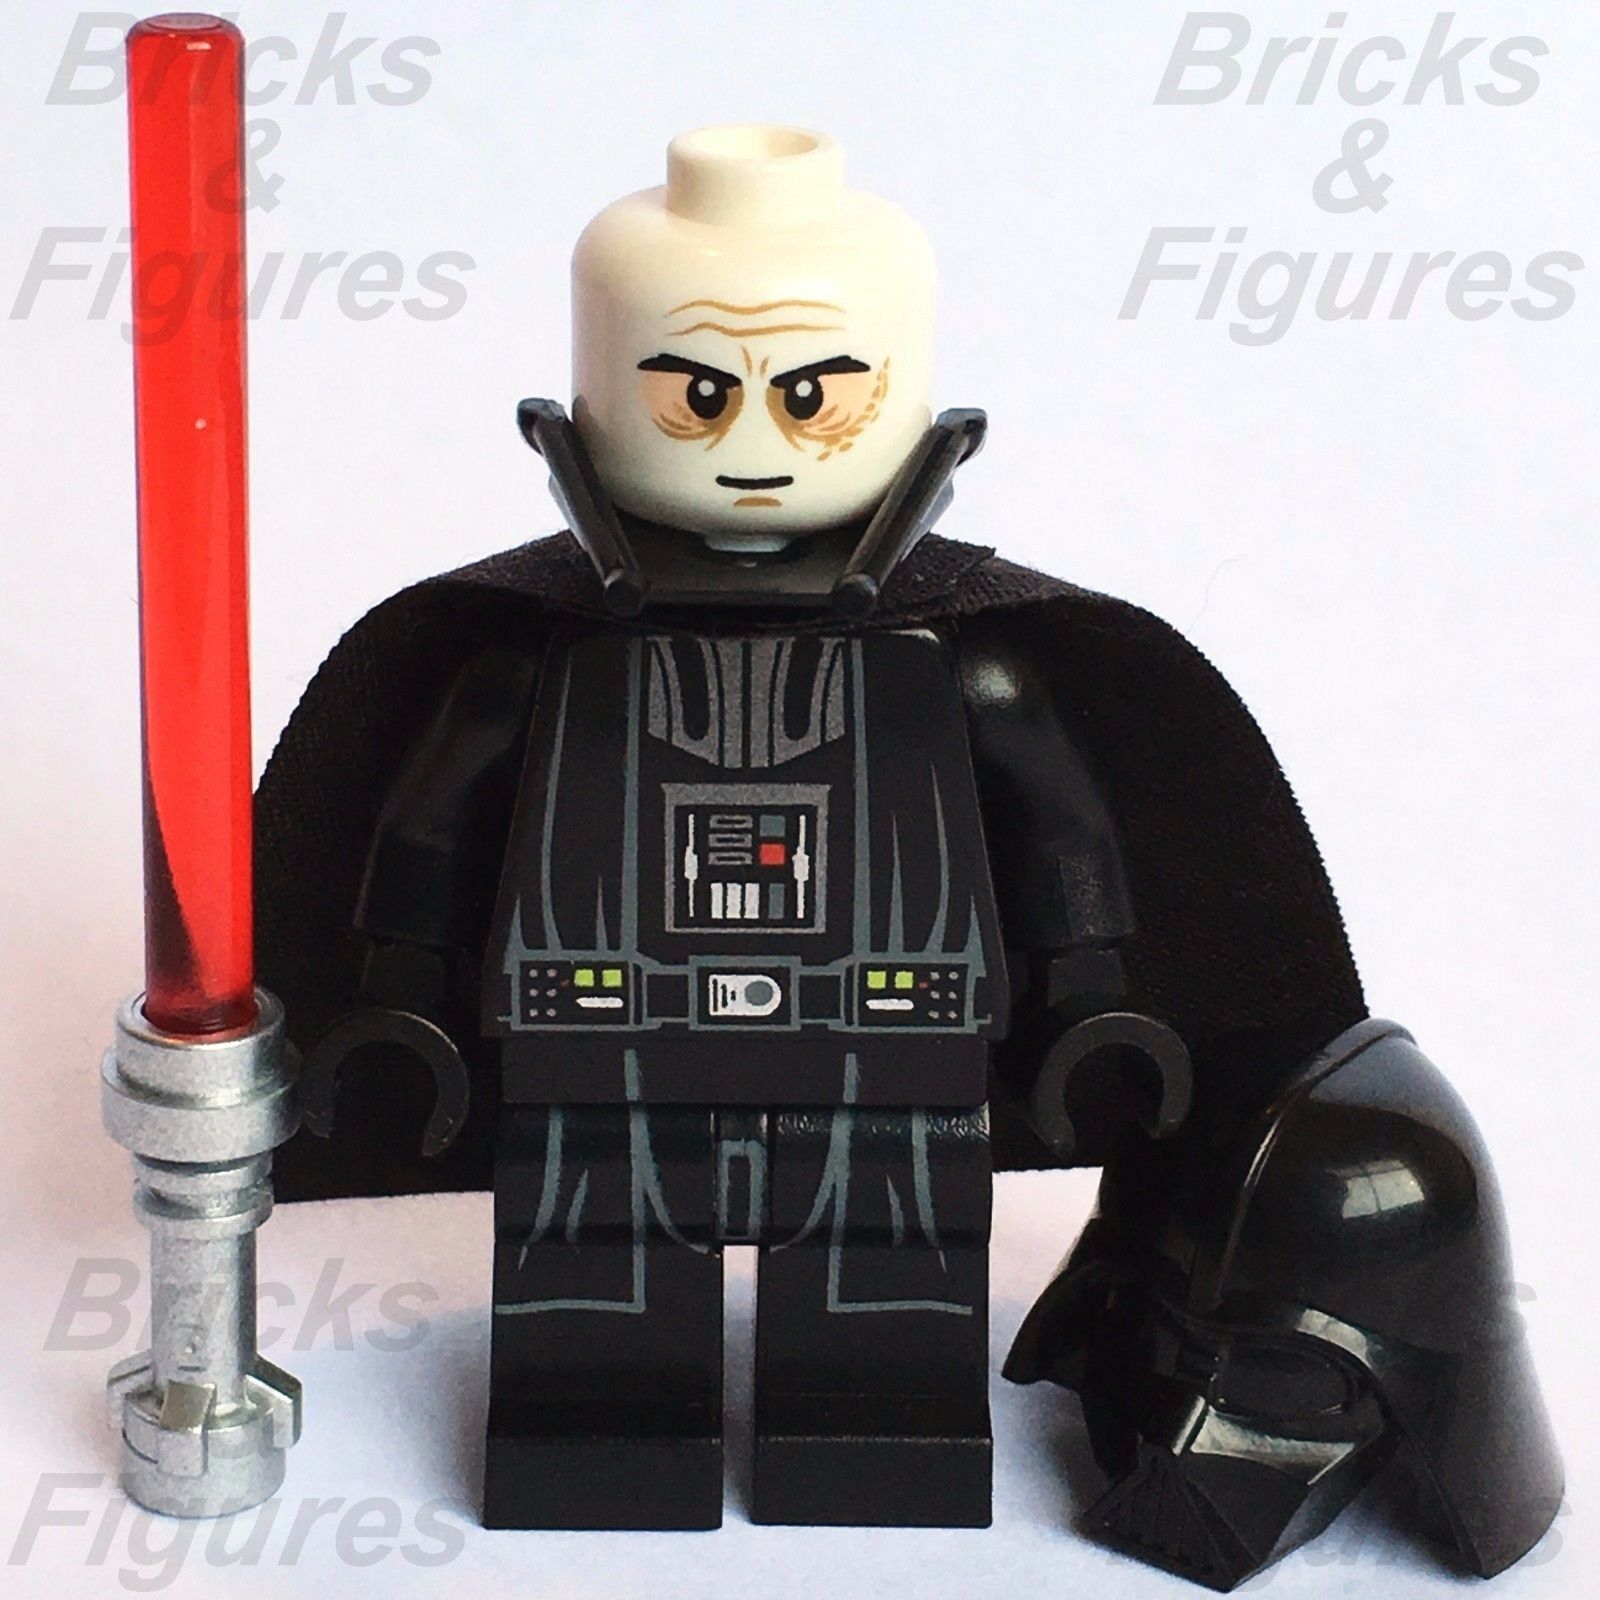 New Star Wars LEGO Darth Vader Sith Lord The Clone Wars Minifigure 75150 - Bricks & Figures